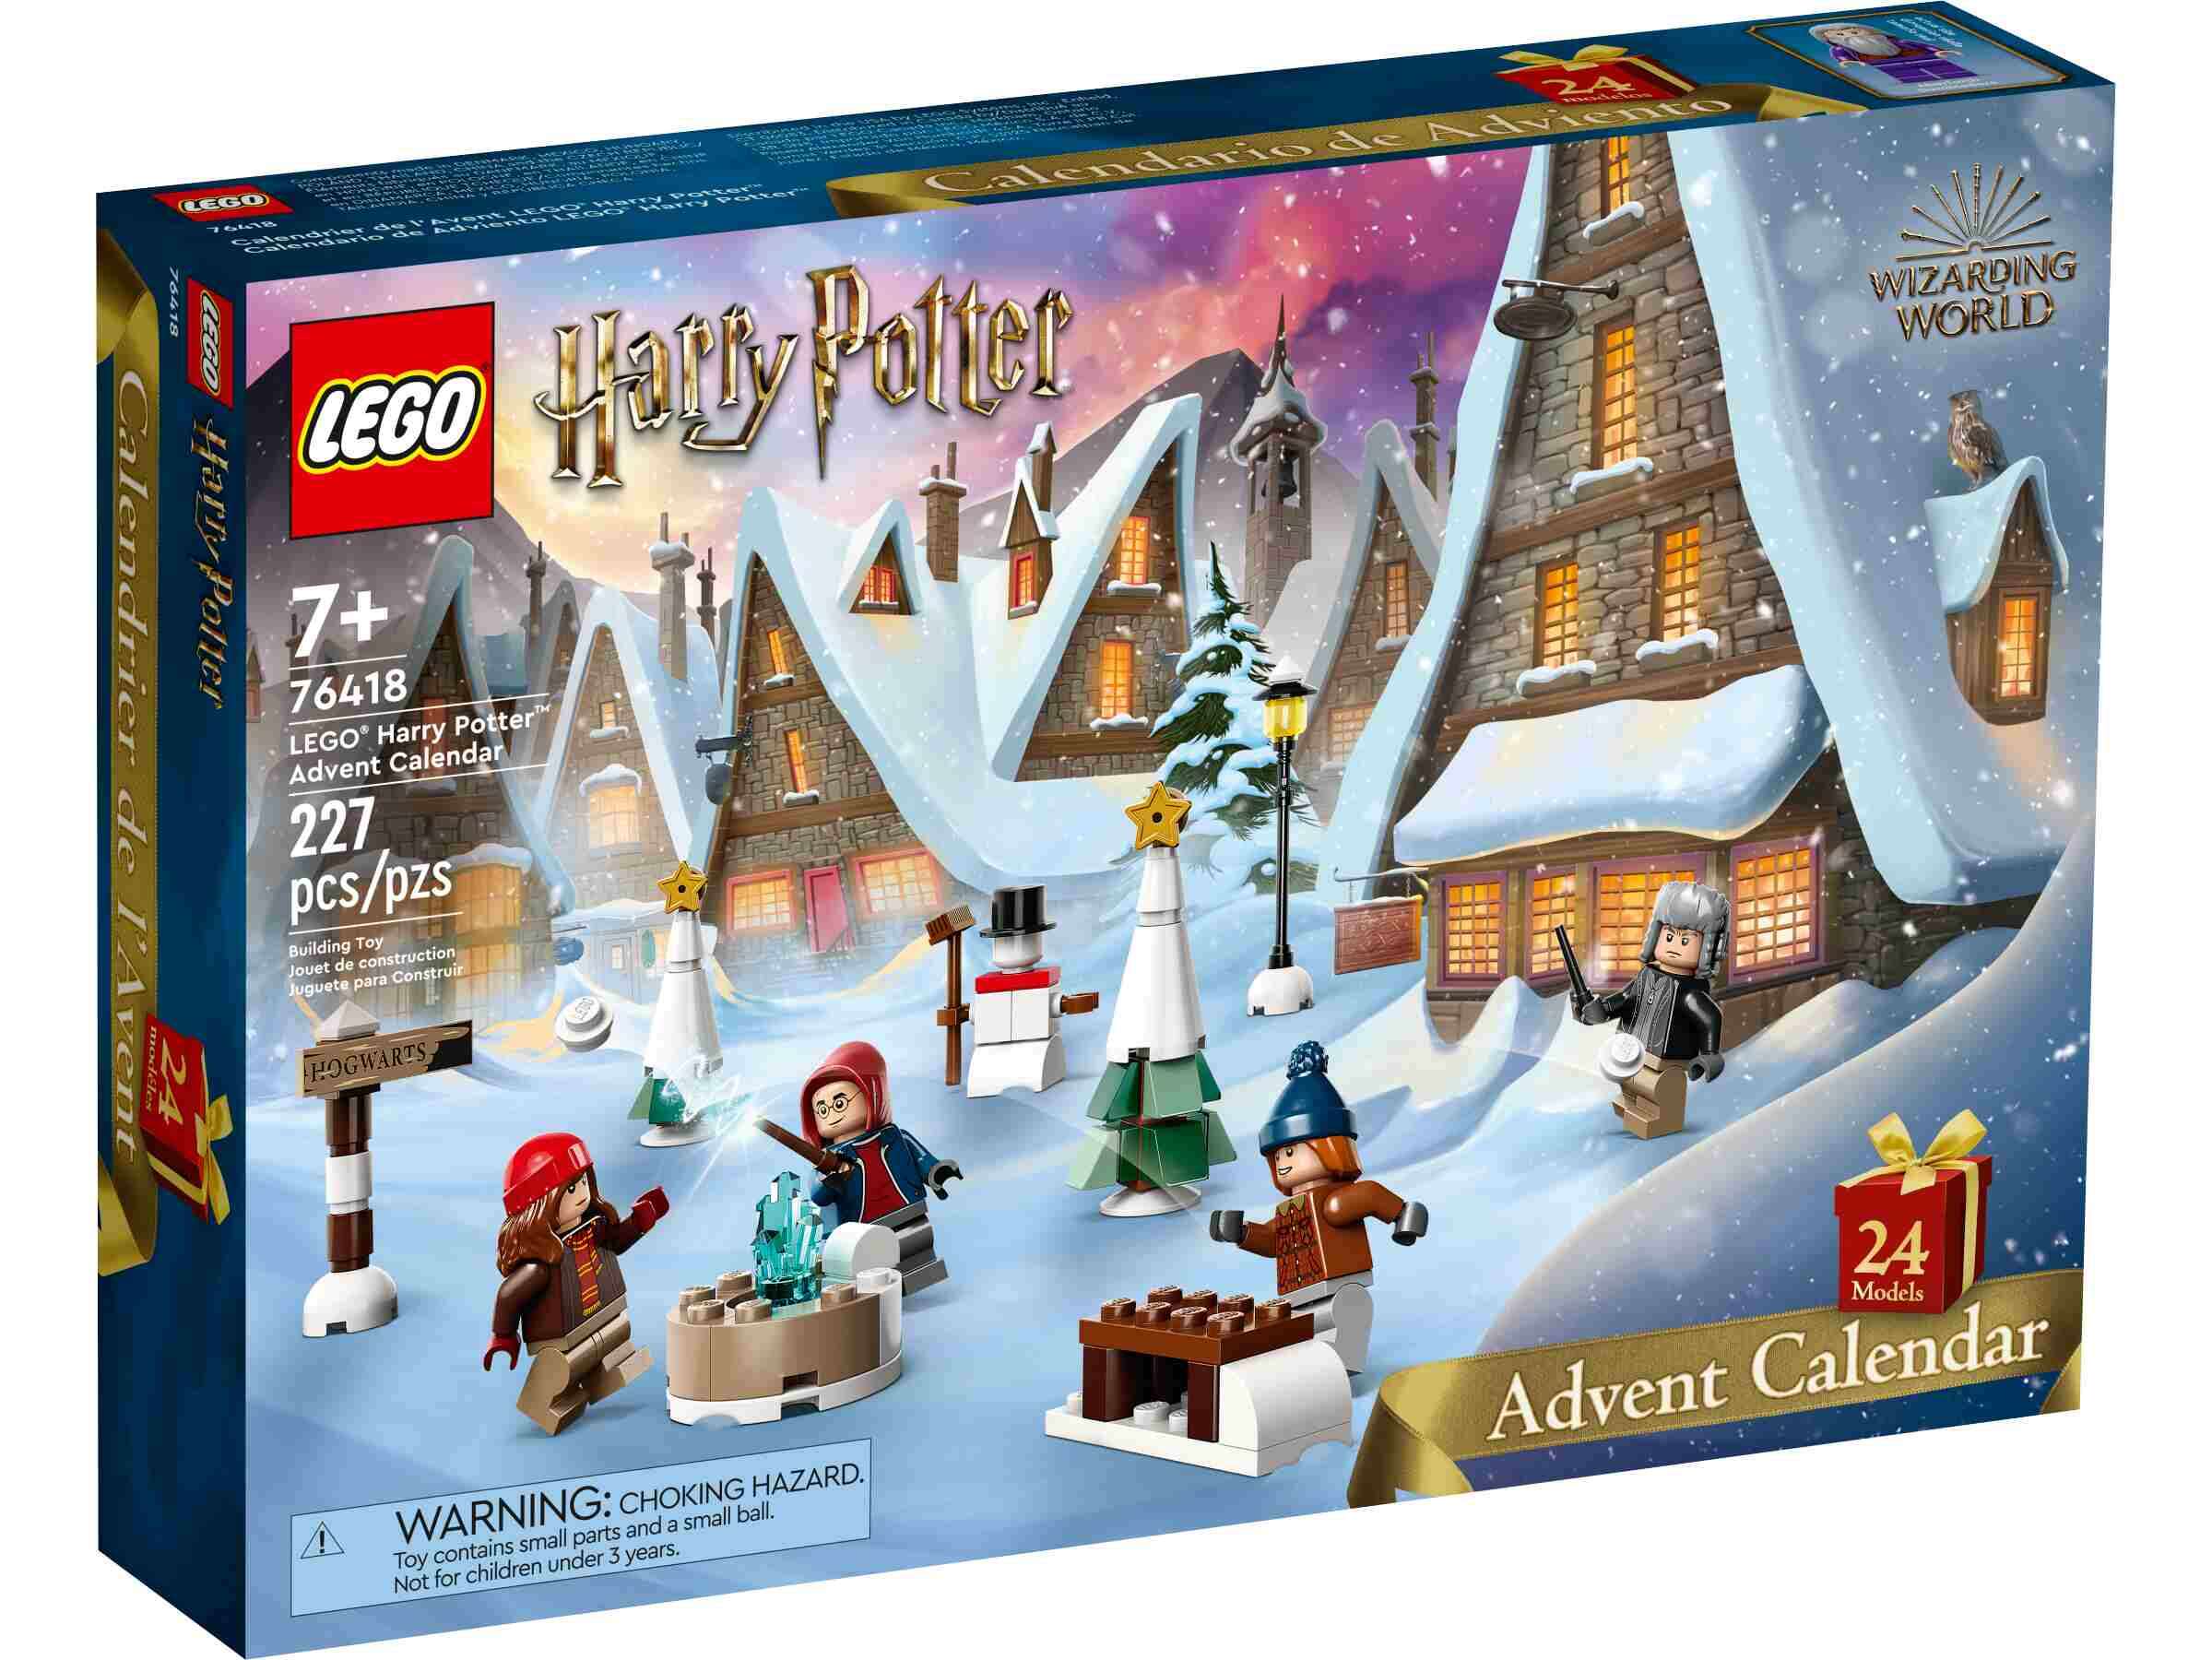 LEGO 76418 Harry Potter Adventskalender, 6 Minifiguren 18 Mini-Modelle von Orten